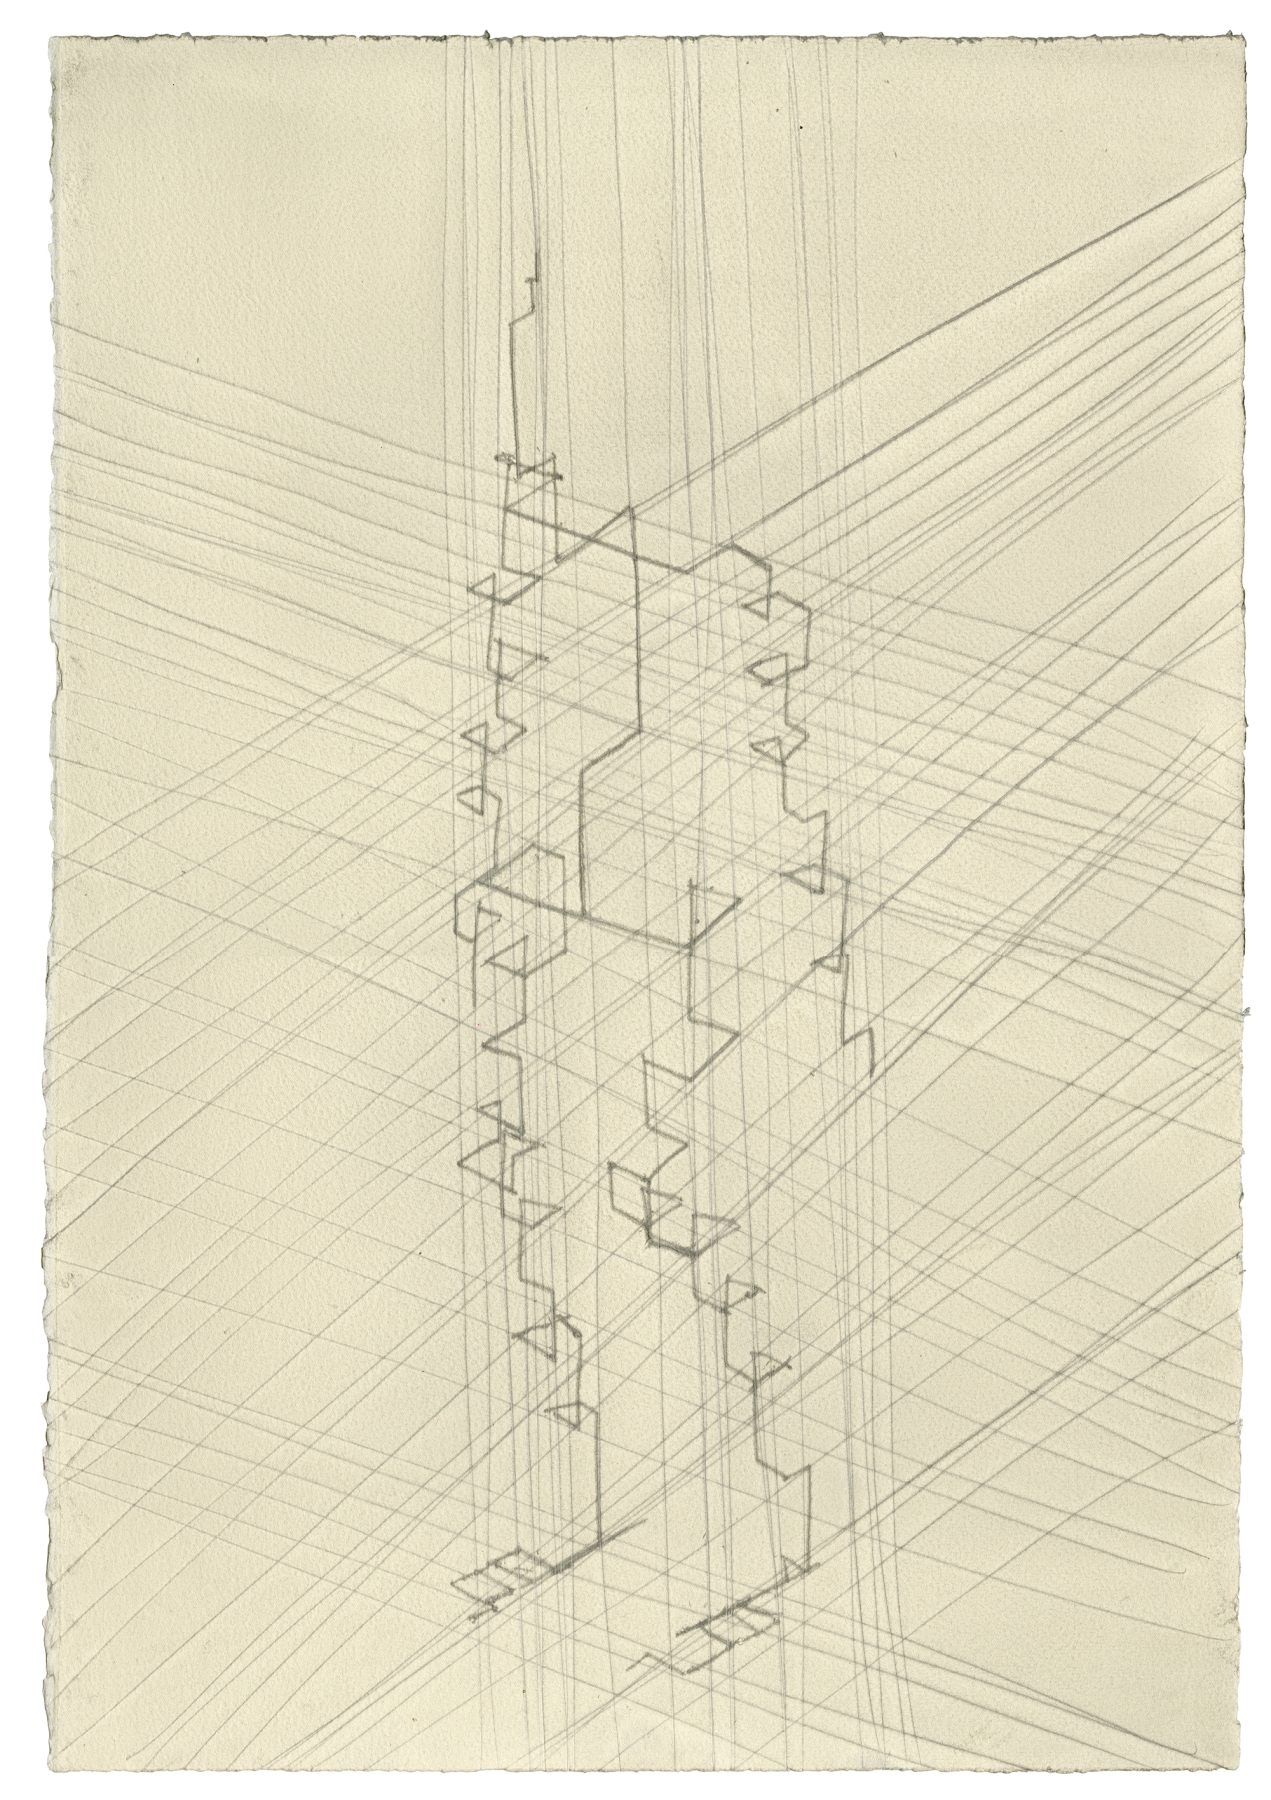 Antony Gormley, BRACE III, 2018, Carbon and casein on paper, 55.7 x 38.5cm &copy; the artist